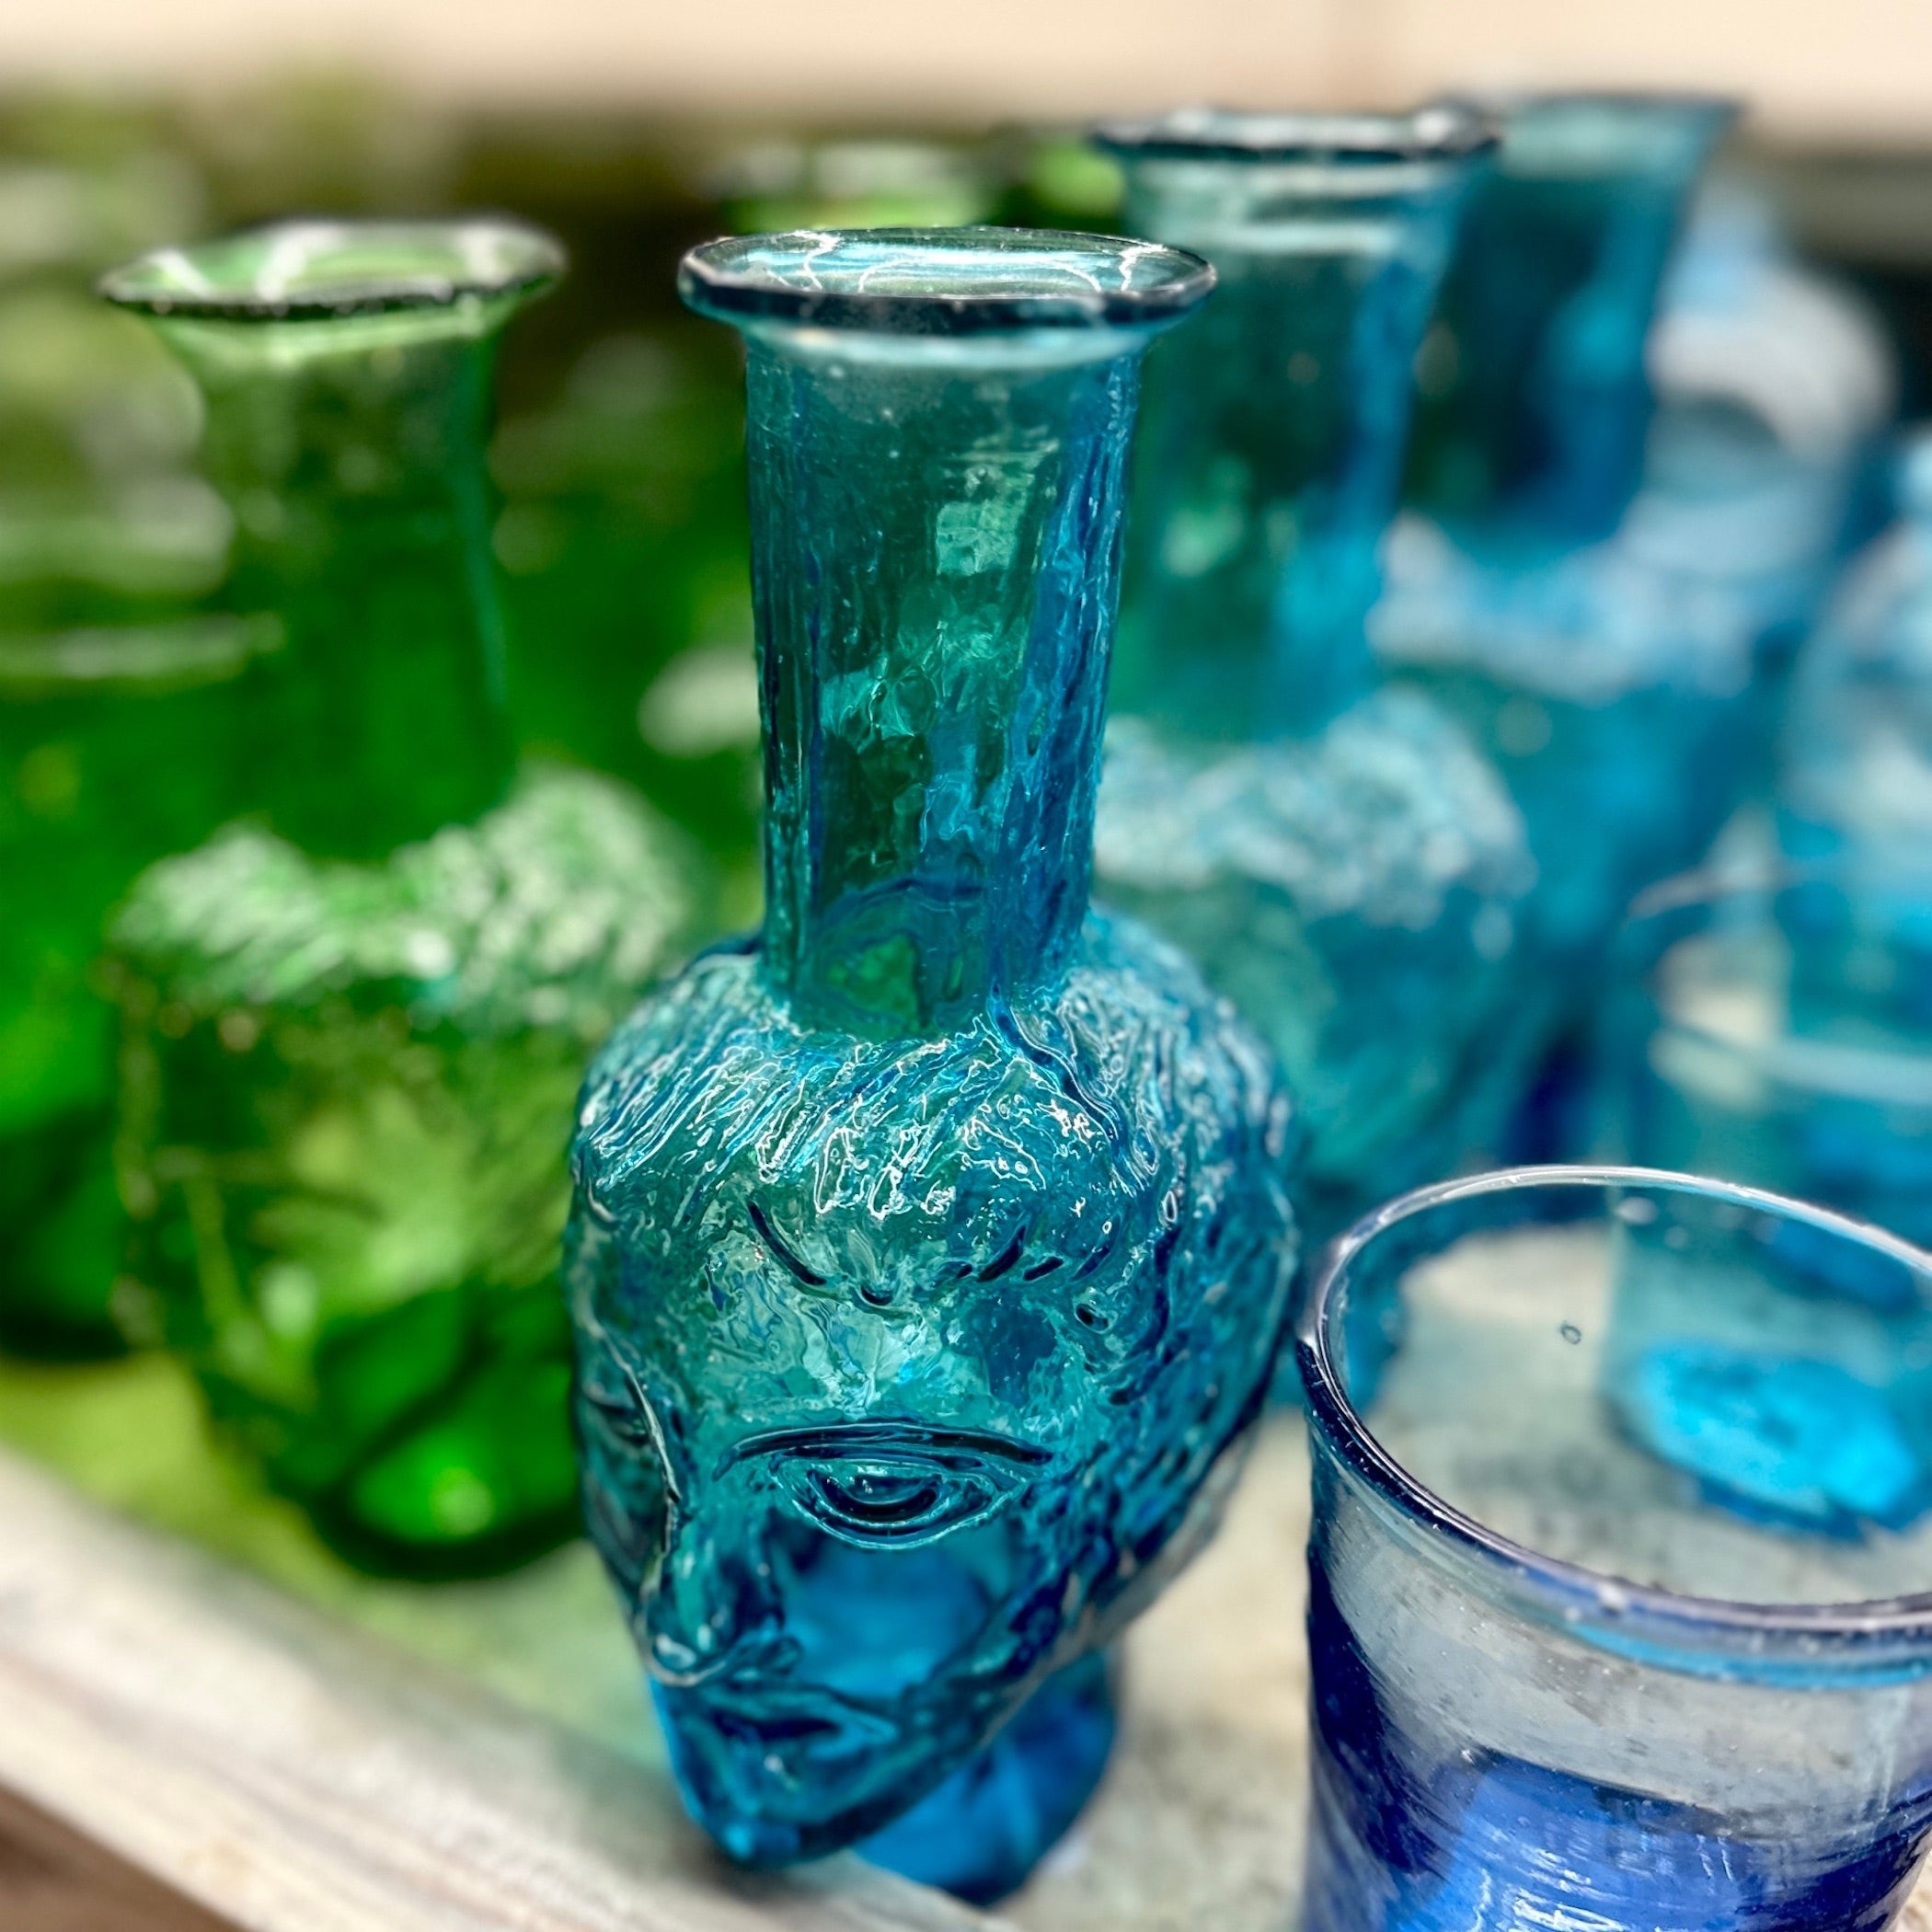 La Soufflerie】フラワーベース Vase Tete Turquoise | フィールシーン 